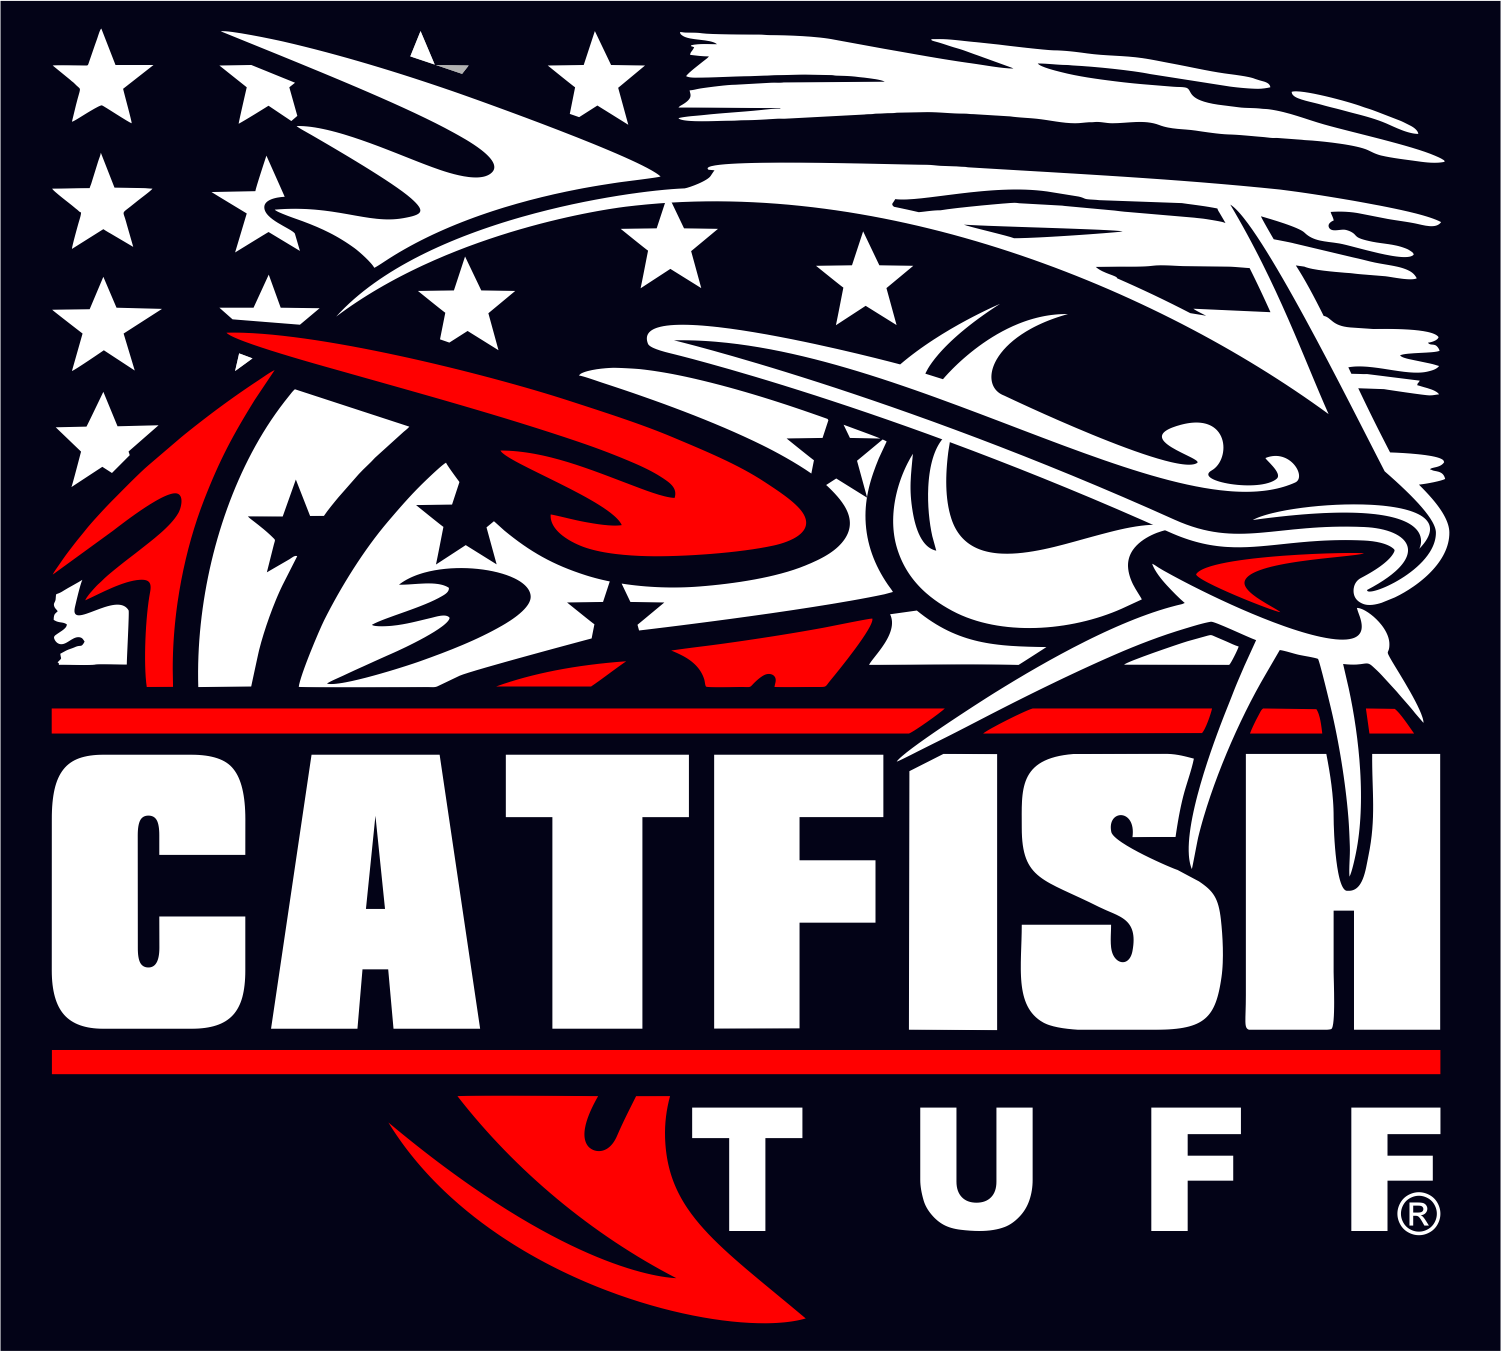 Catfish Tuff - Patriot 5 x 4.5 Decal